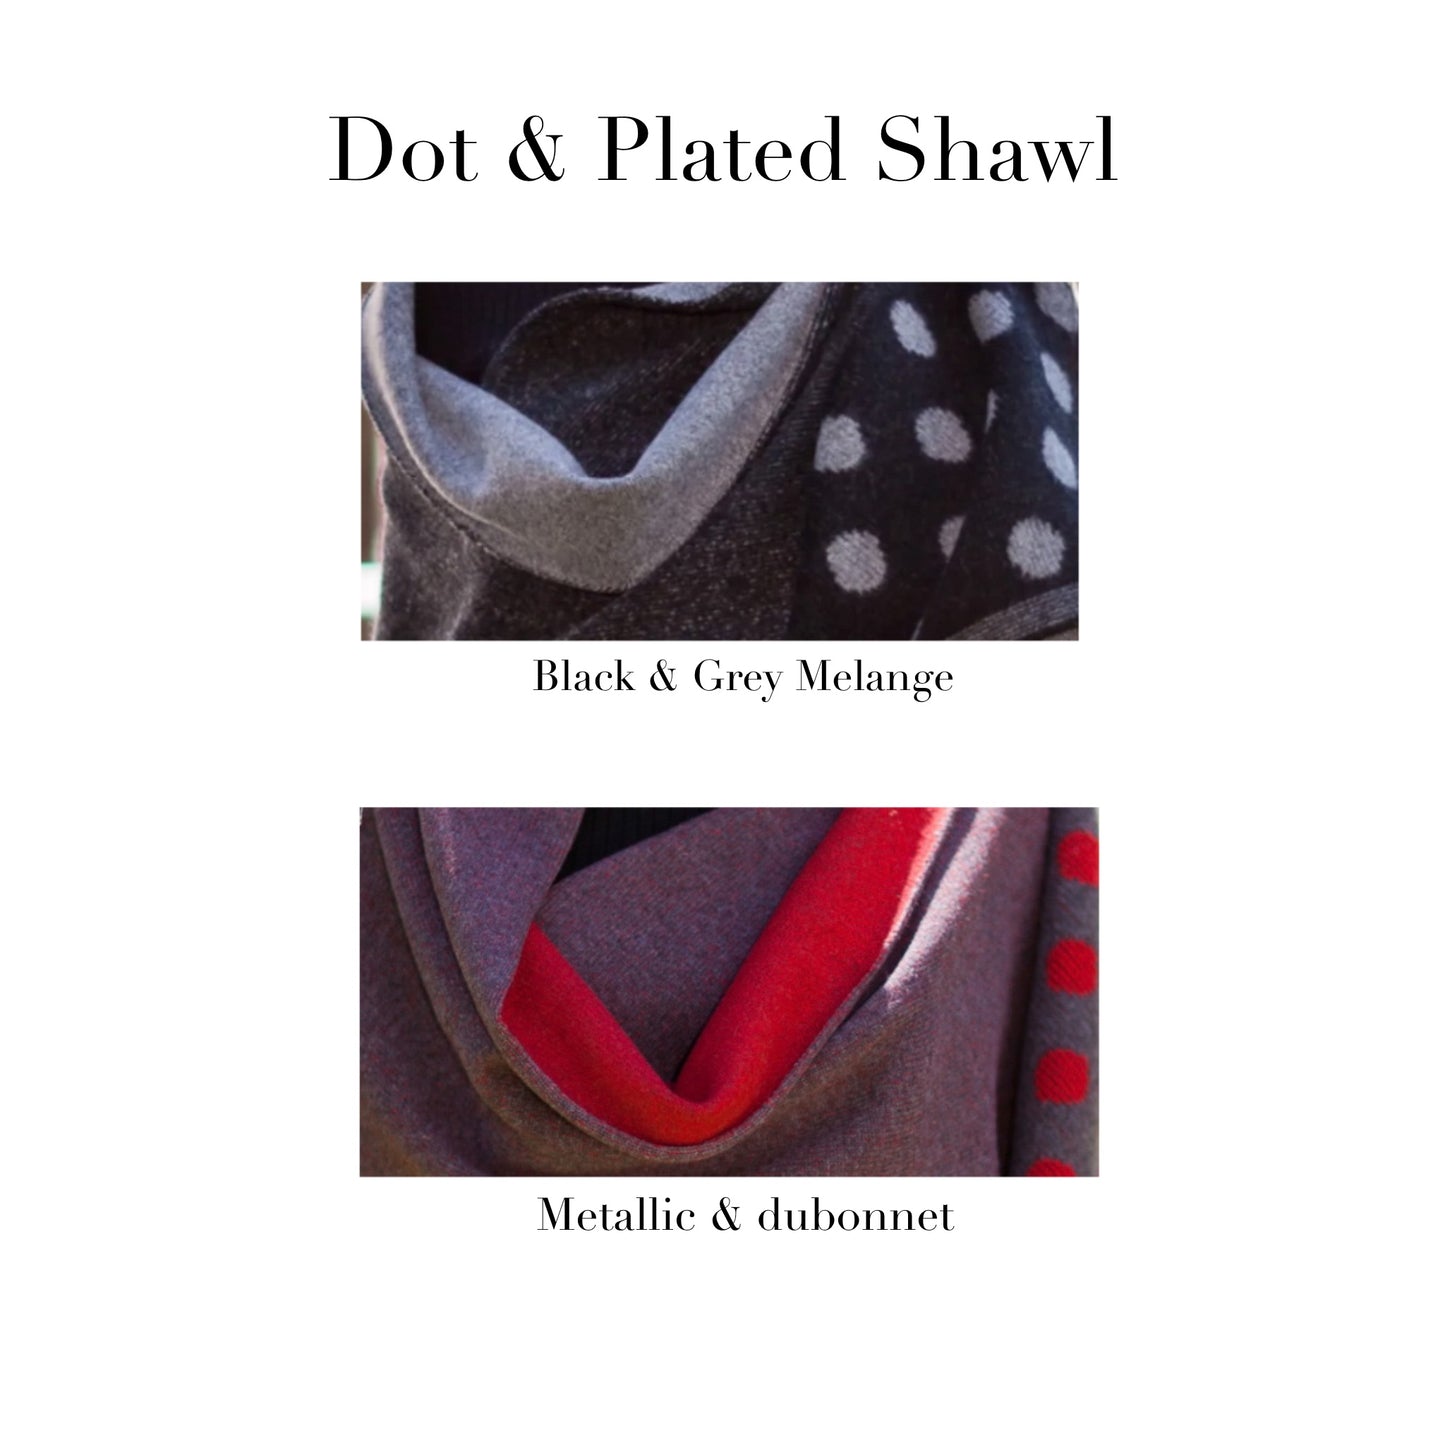 Dot & Plated Shawl